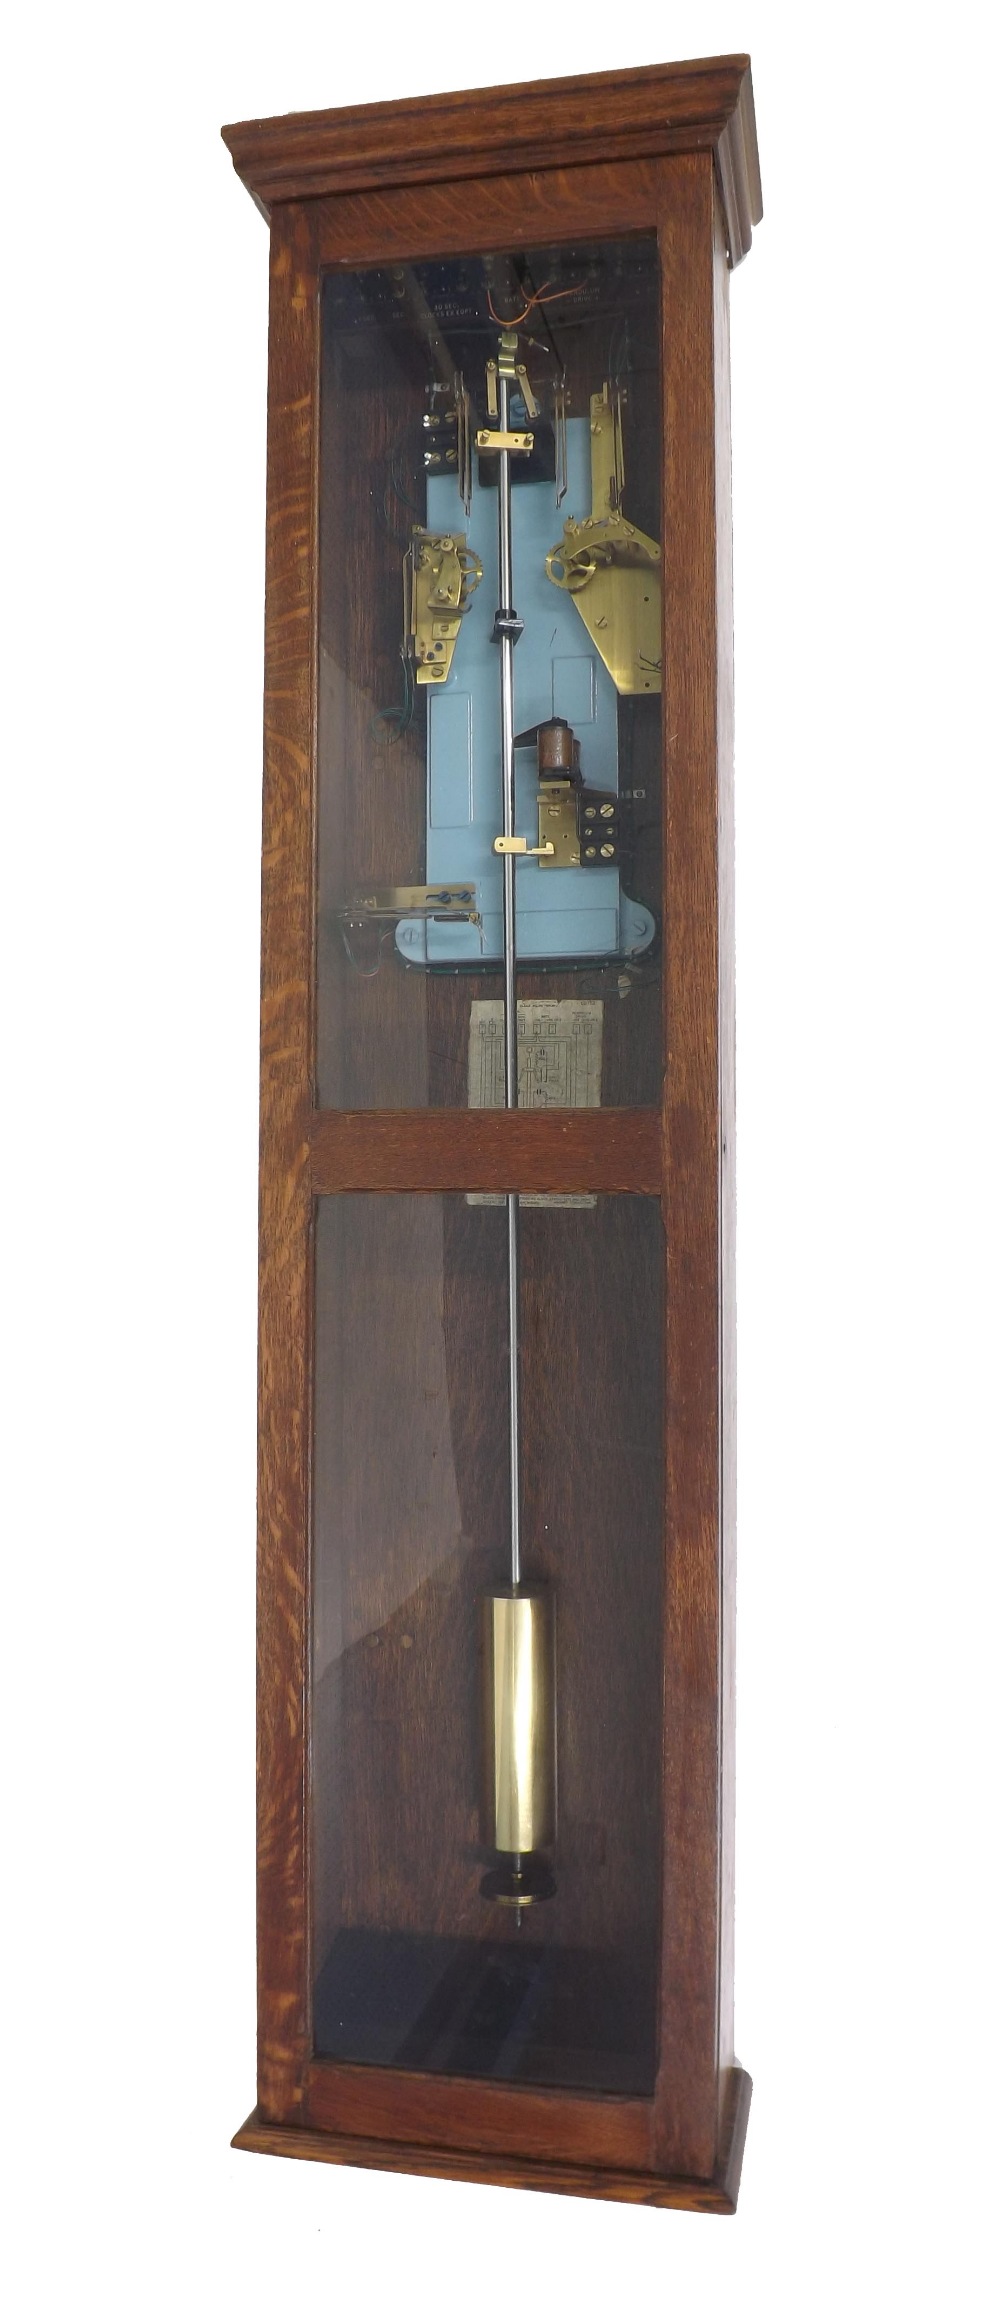 Magneta Post Office (PO 36) Exchange longcase electric master clock, within a two-part oak glazed